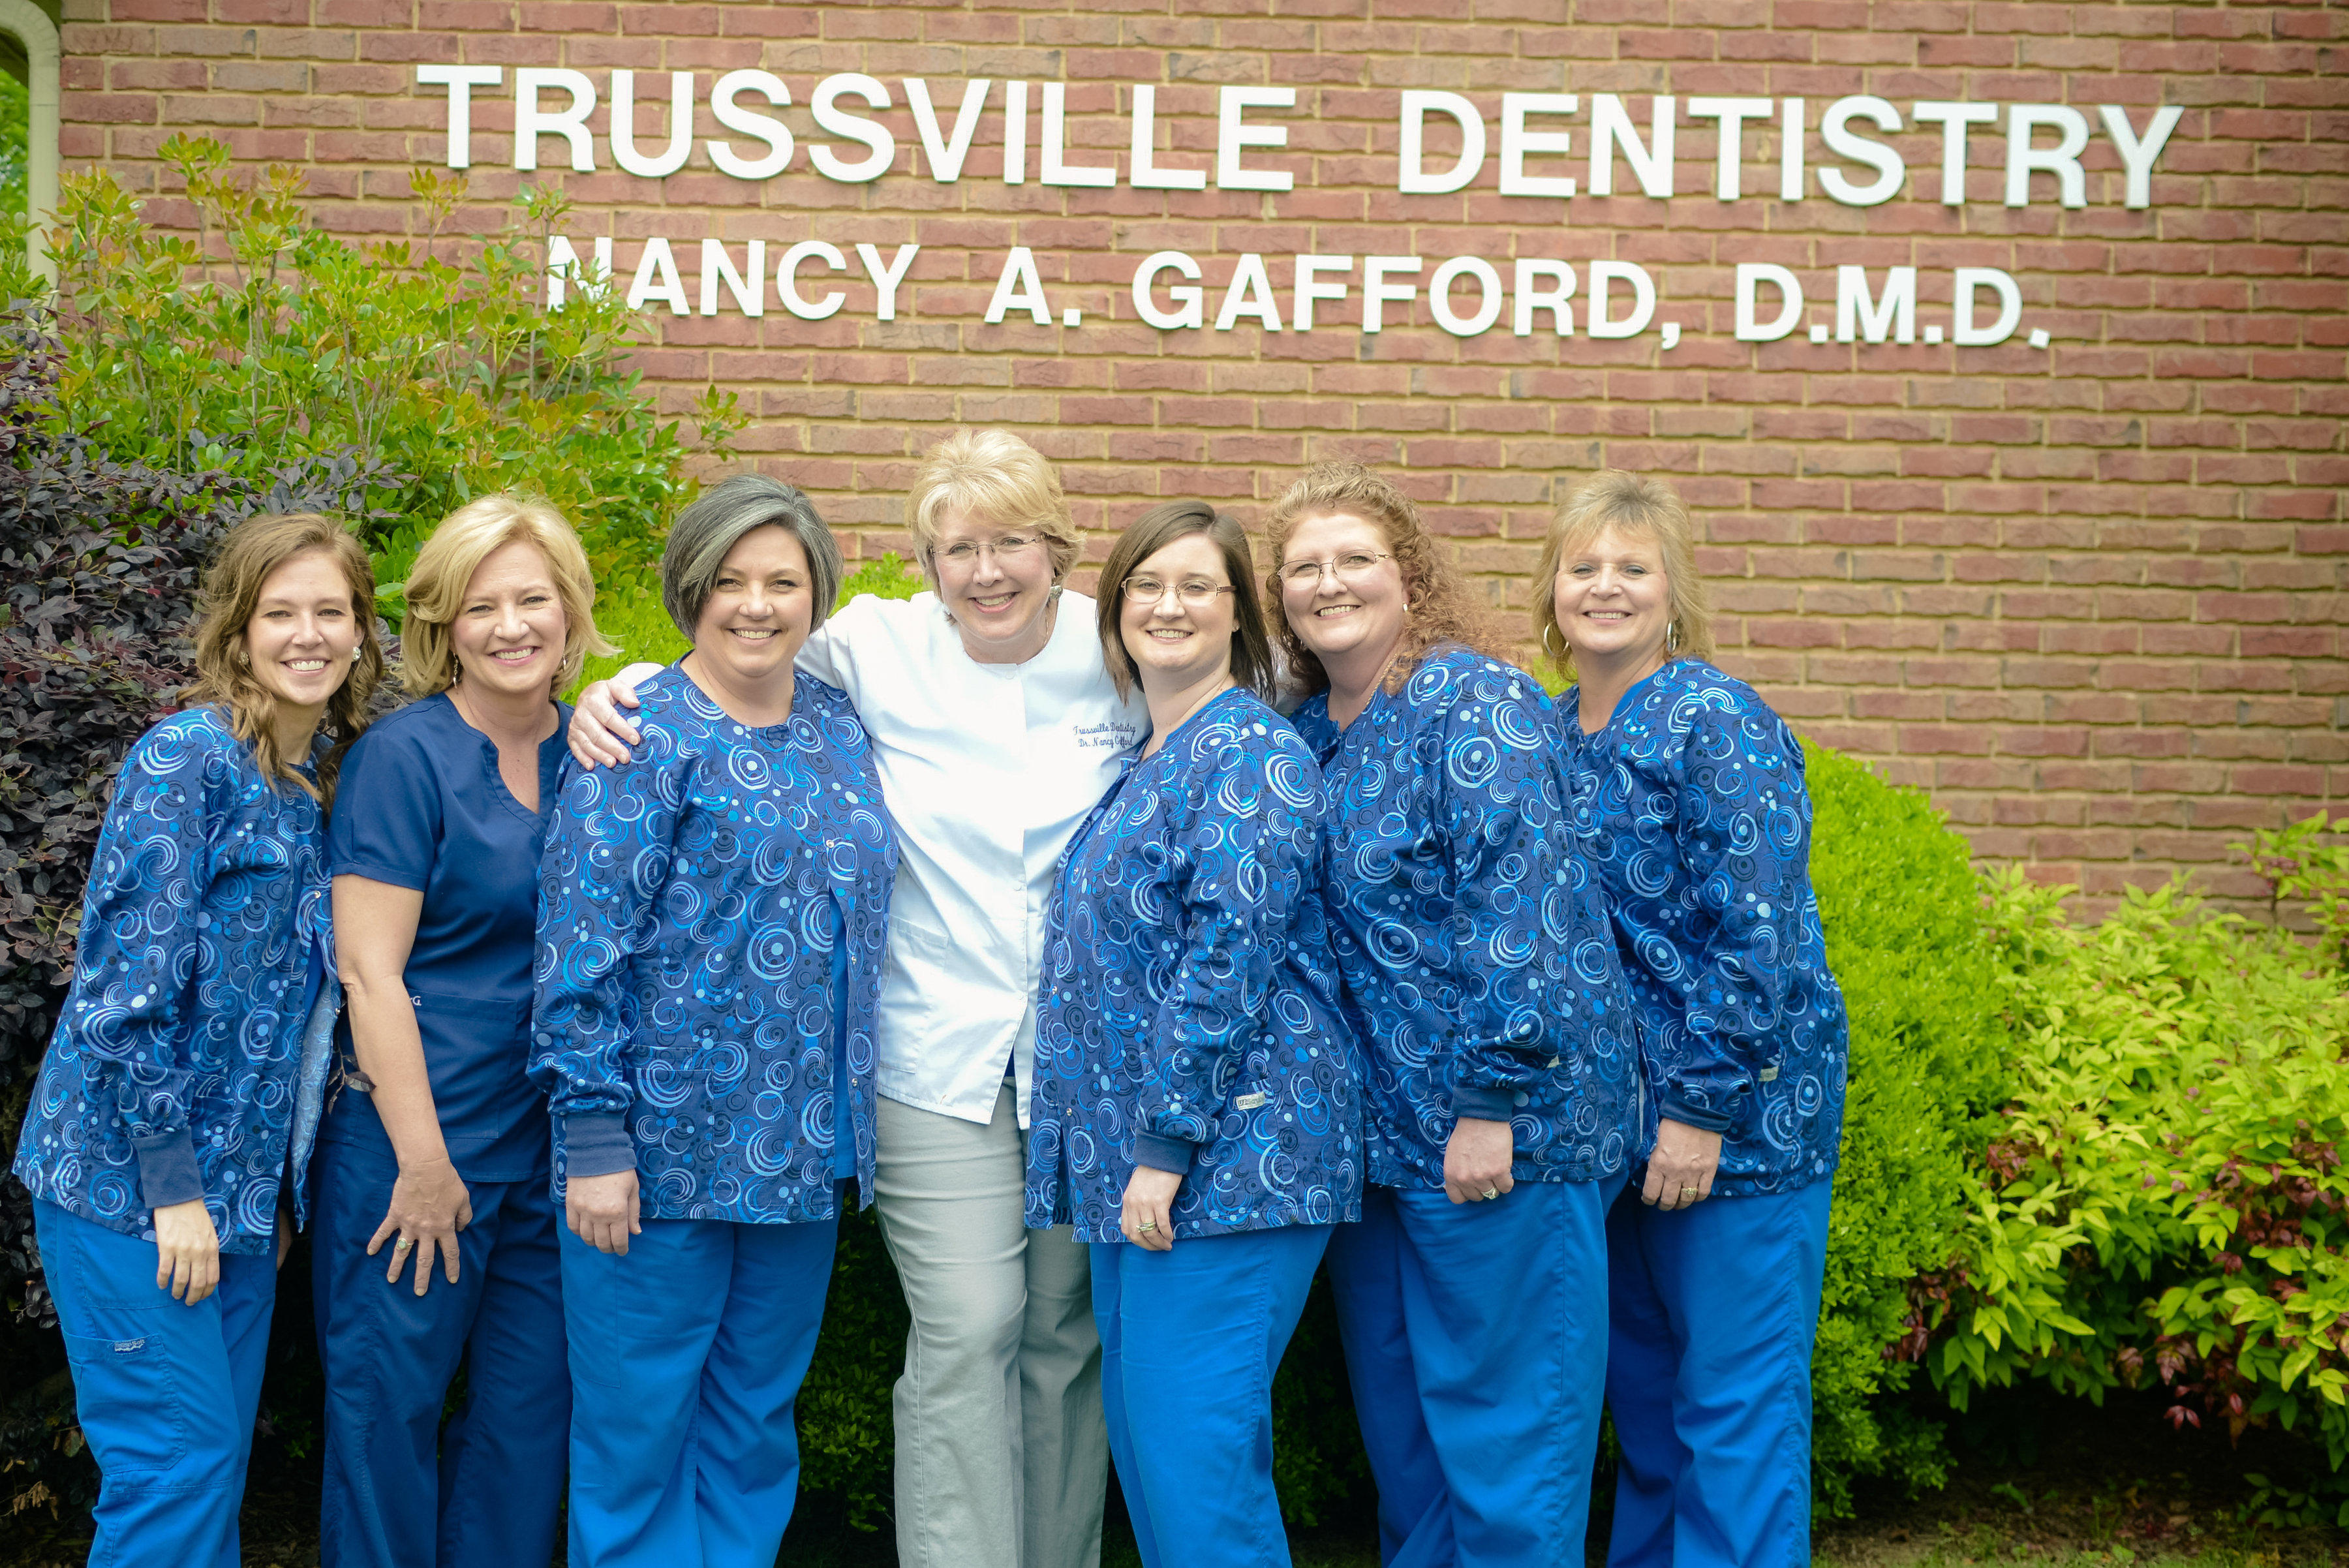 Trussville Dentistry Photo